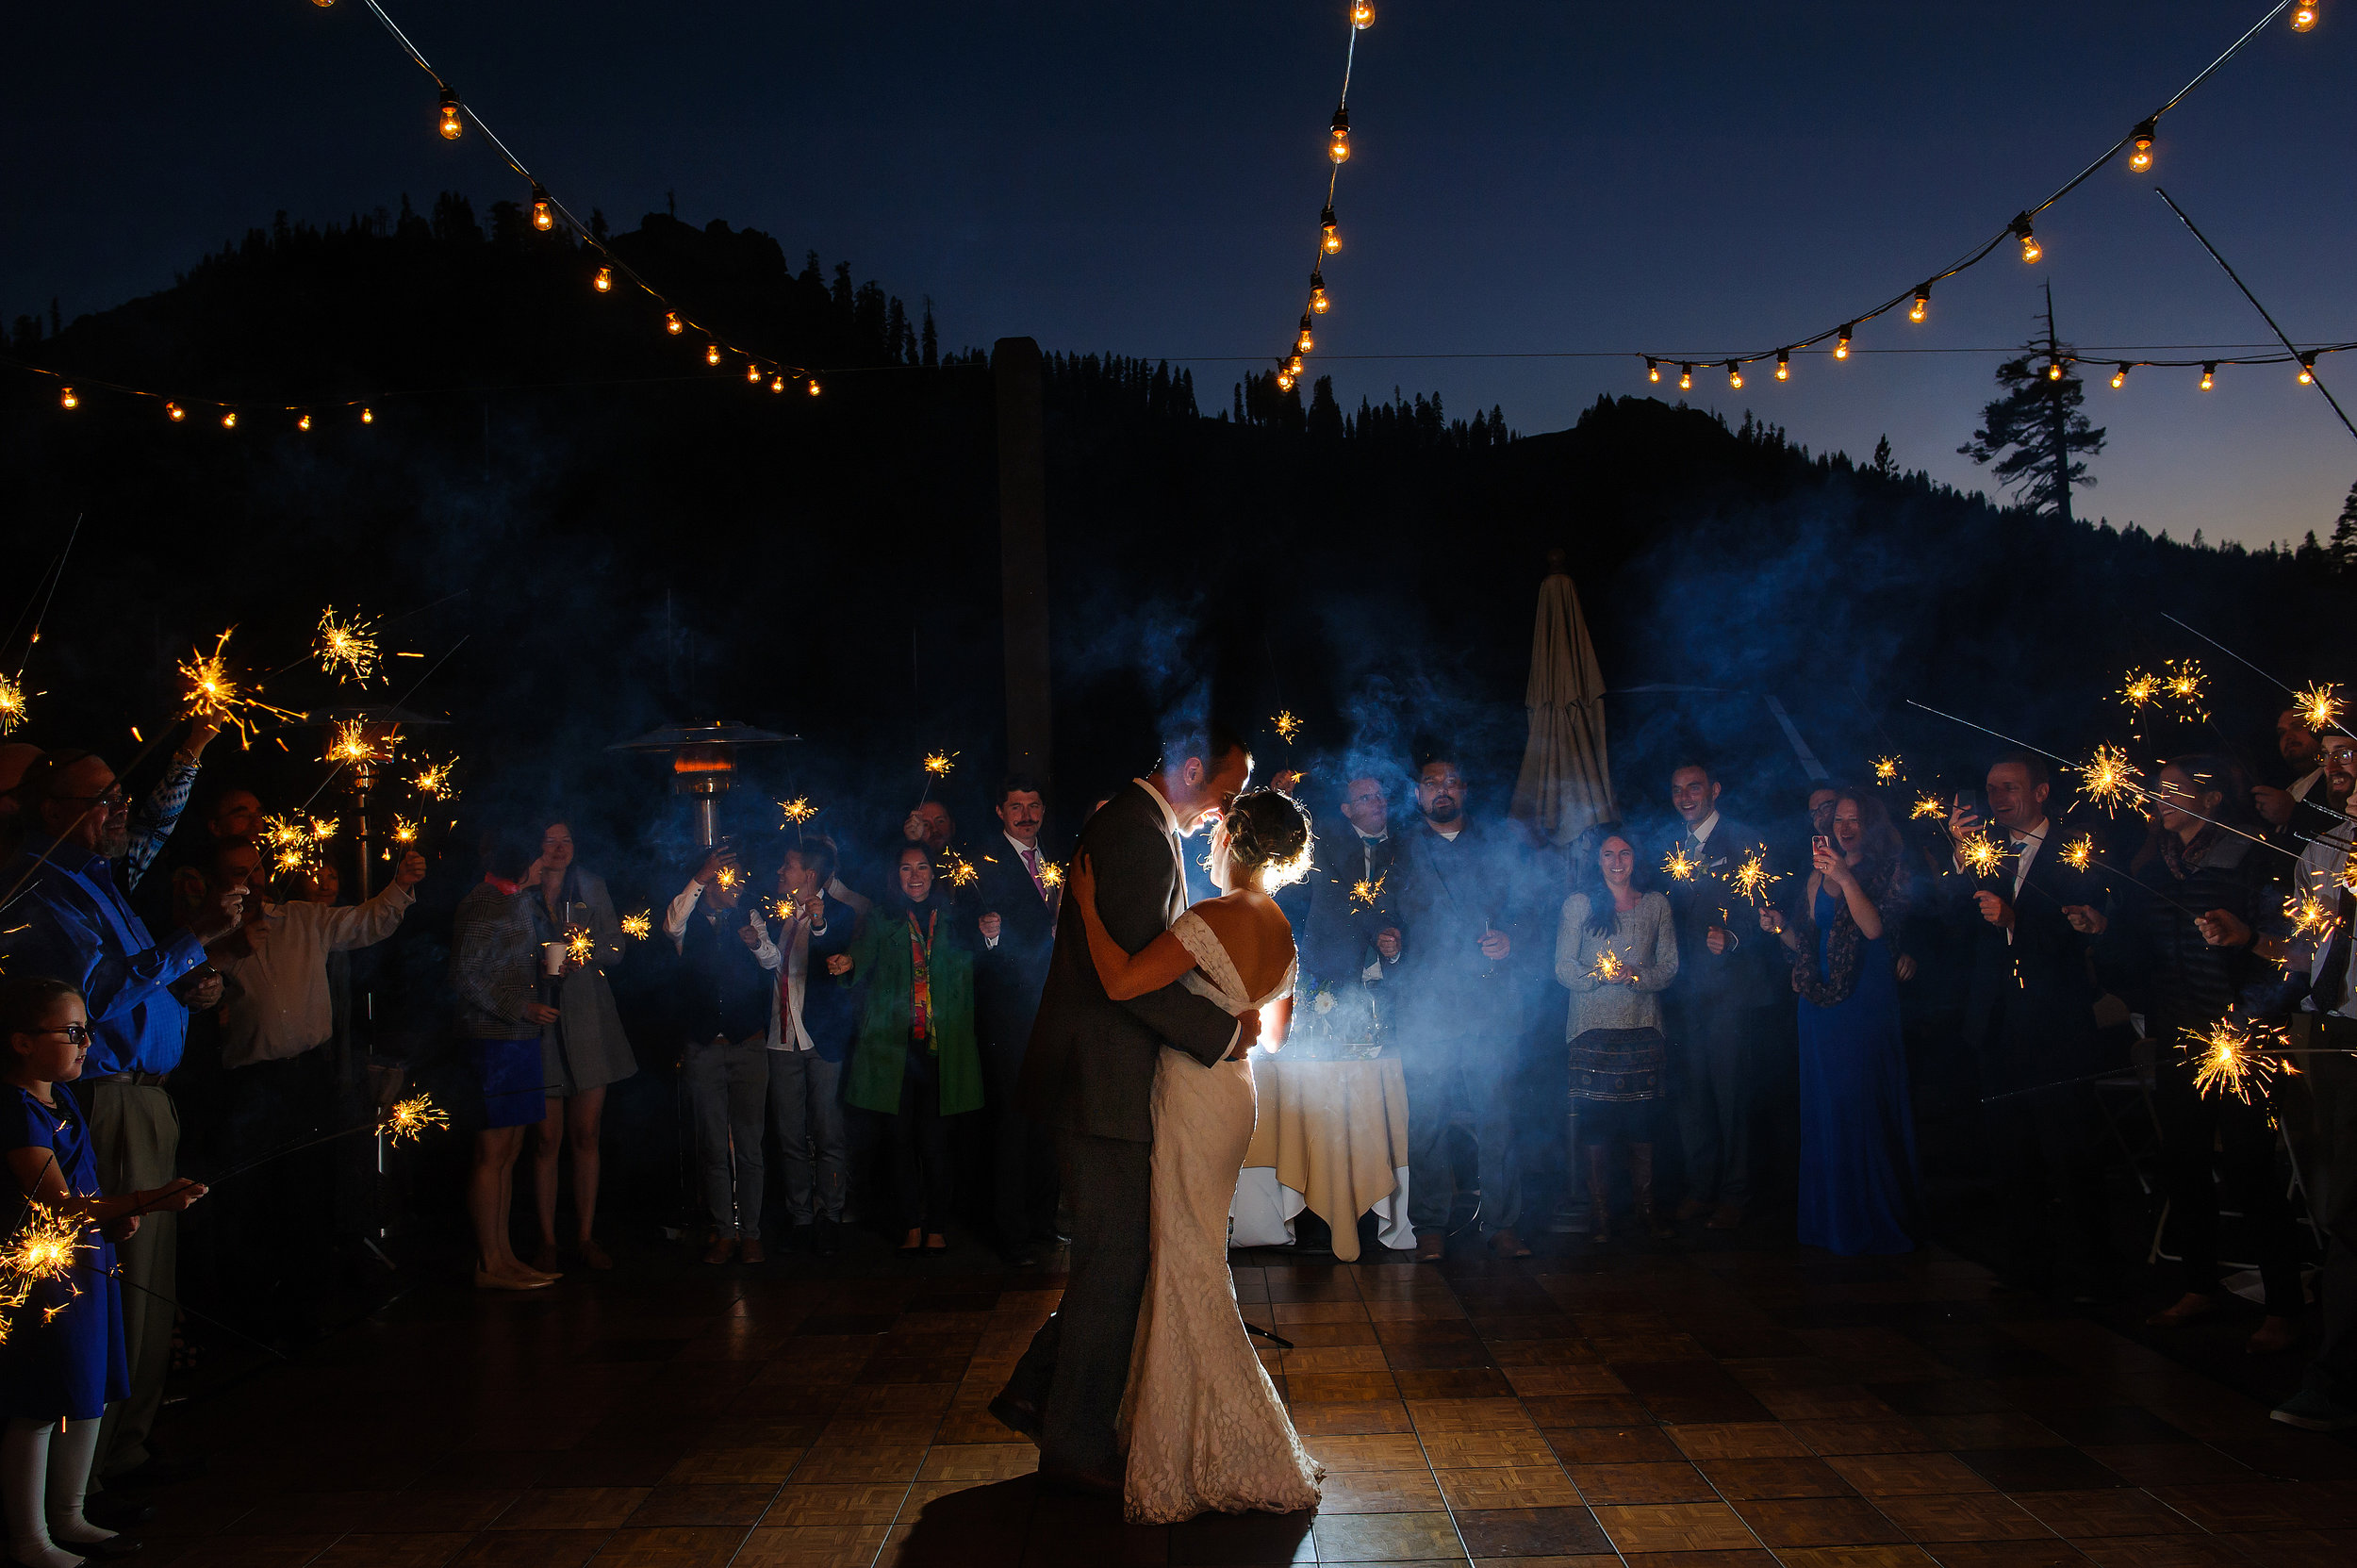  Sparklers during first dance wedding at Sugar Bowl Ski Resort in Tahoe California 